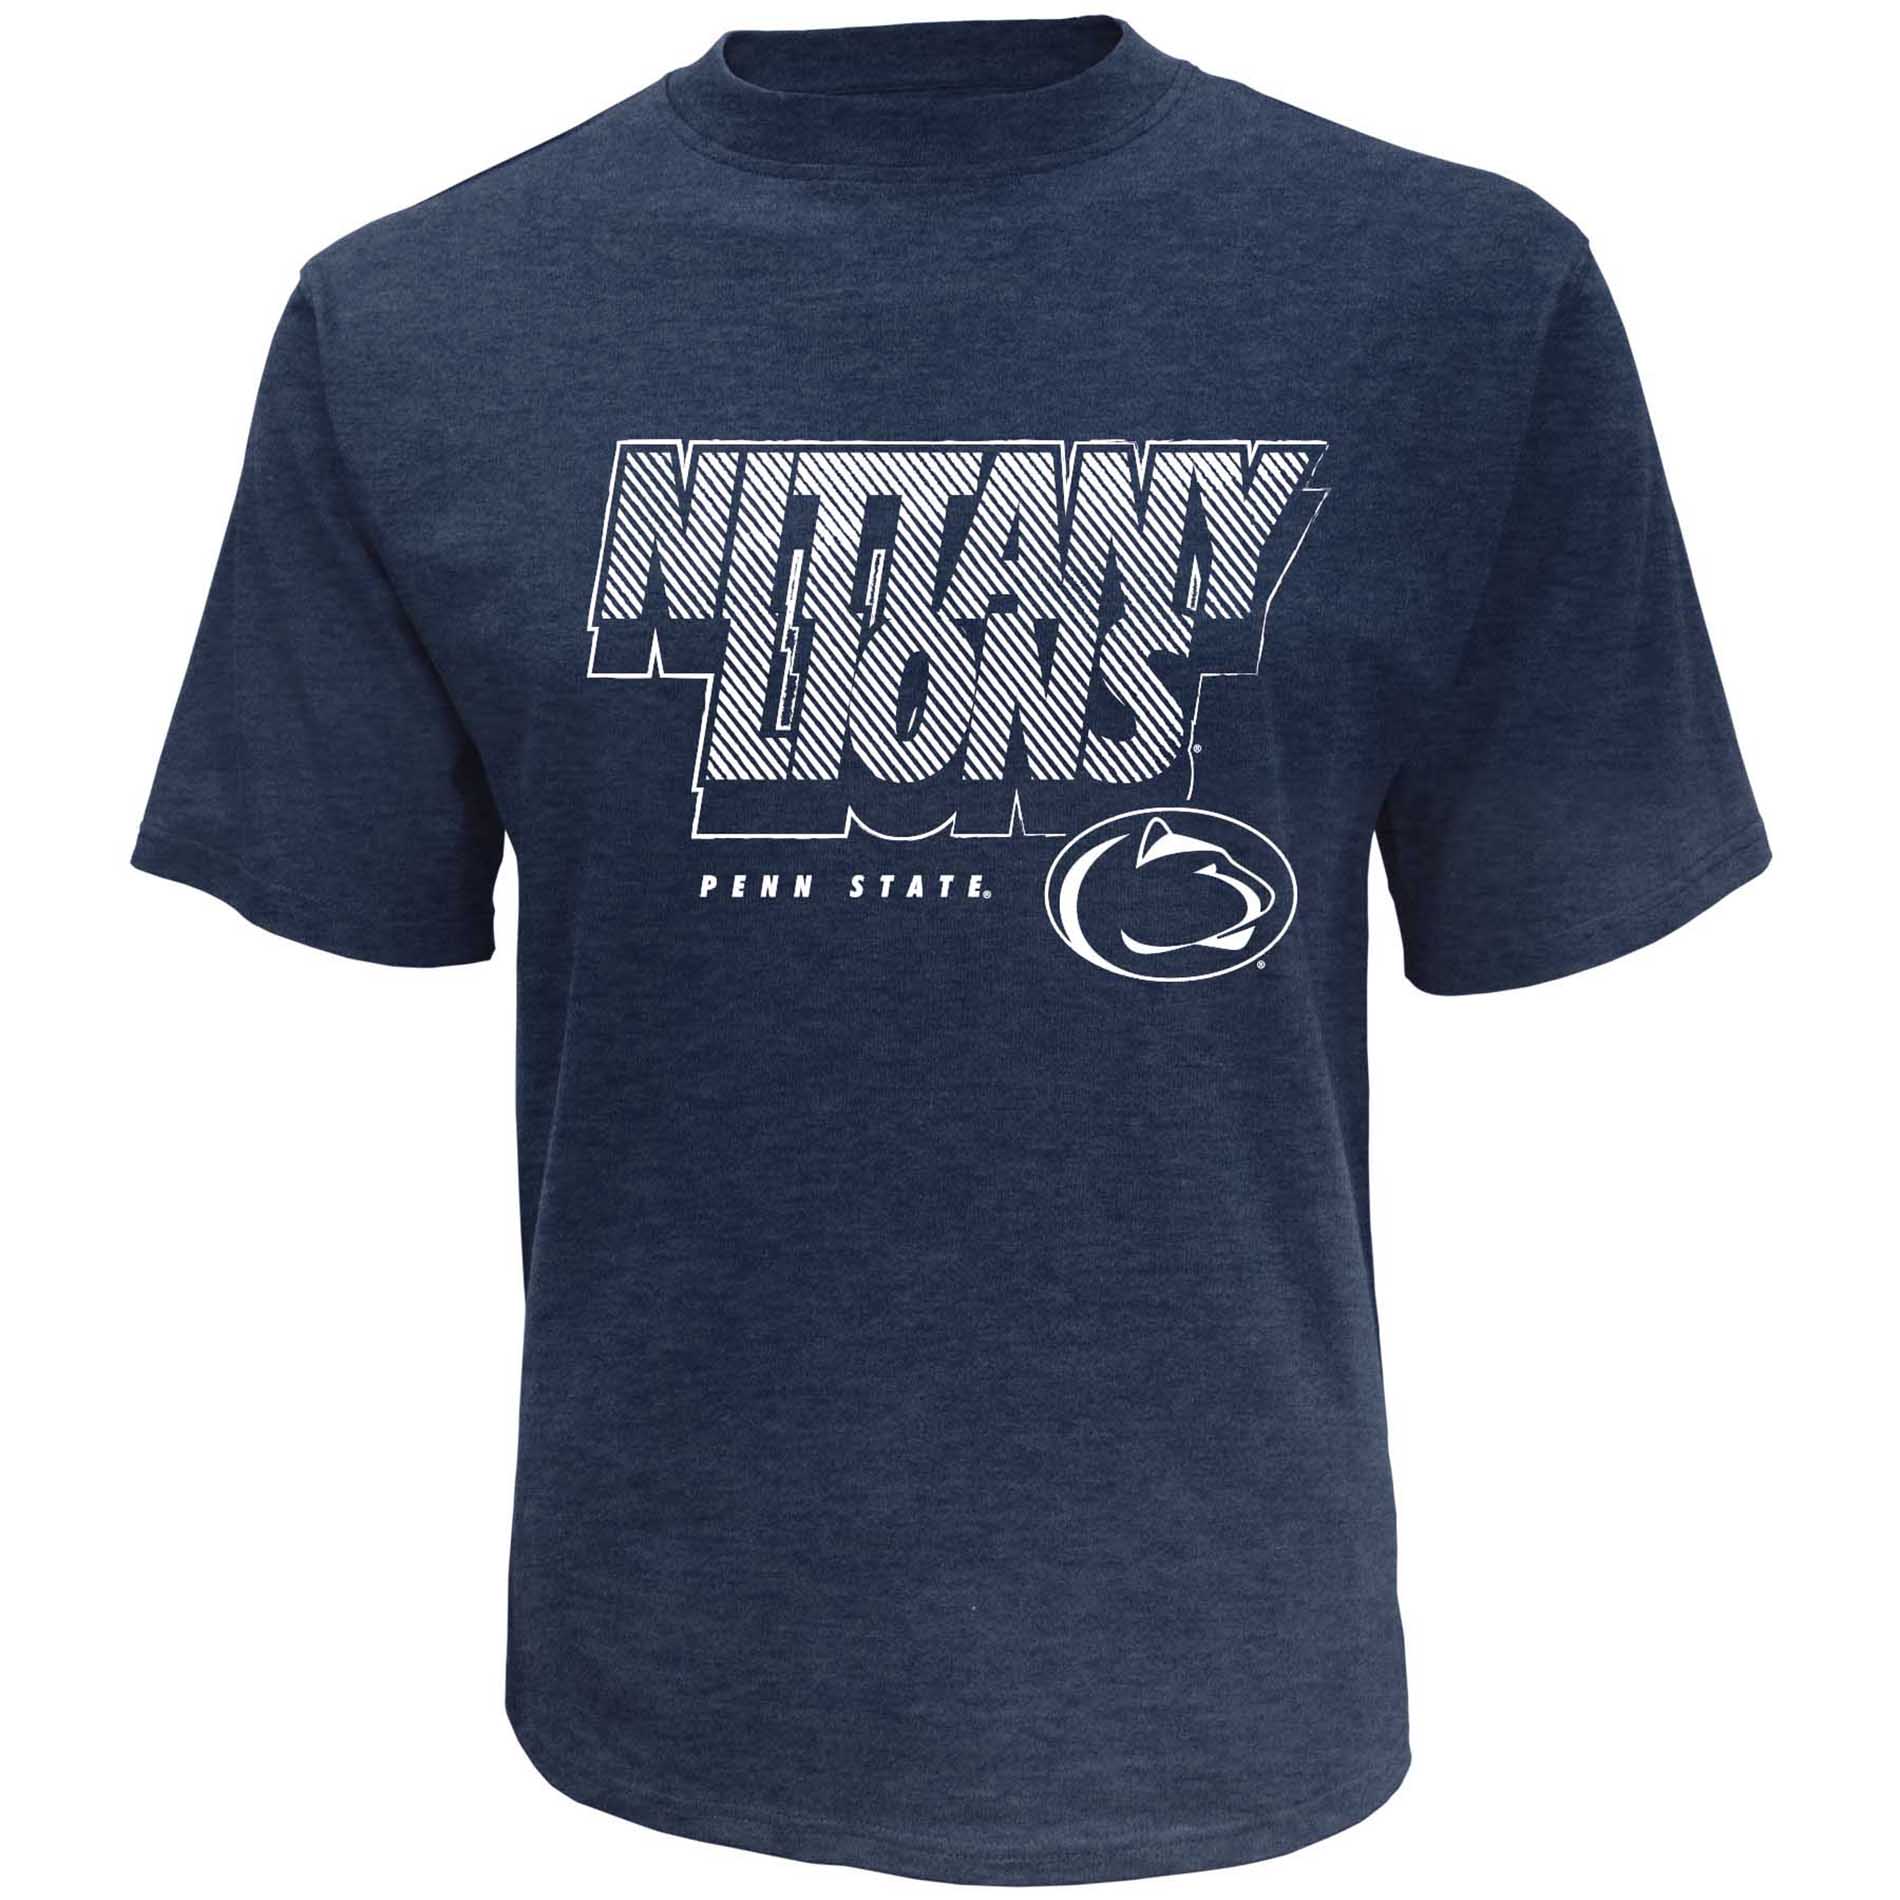 NCAA Men's Big & Tall Pennsylvania State University Nittany Lions Short Sleeve Print Tee